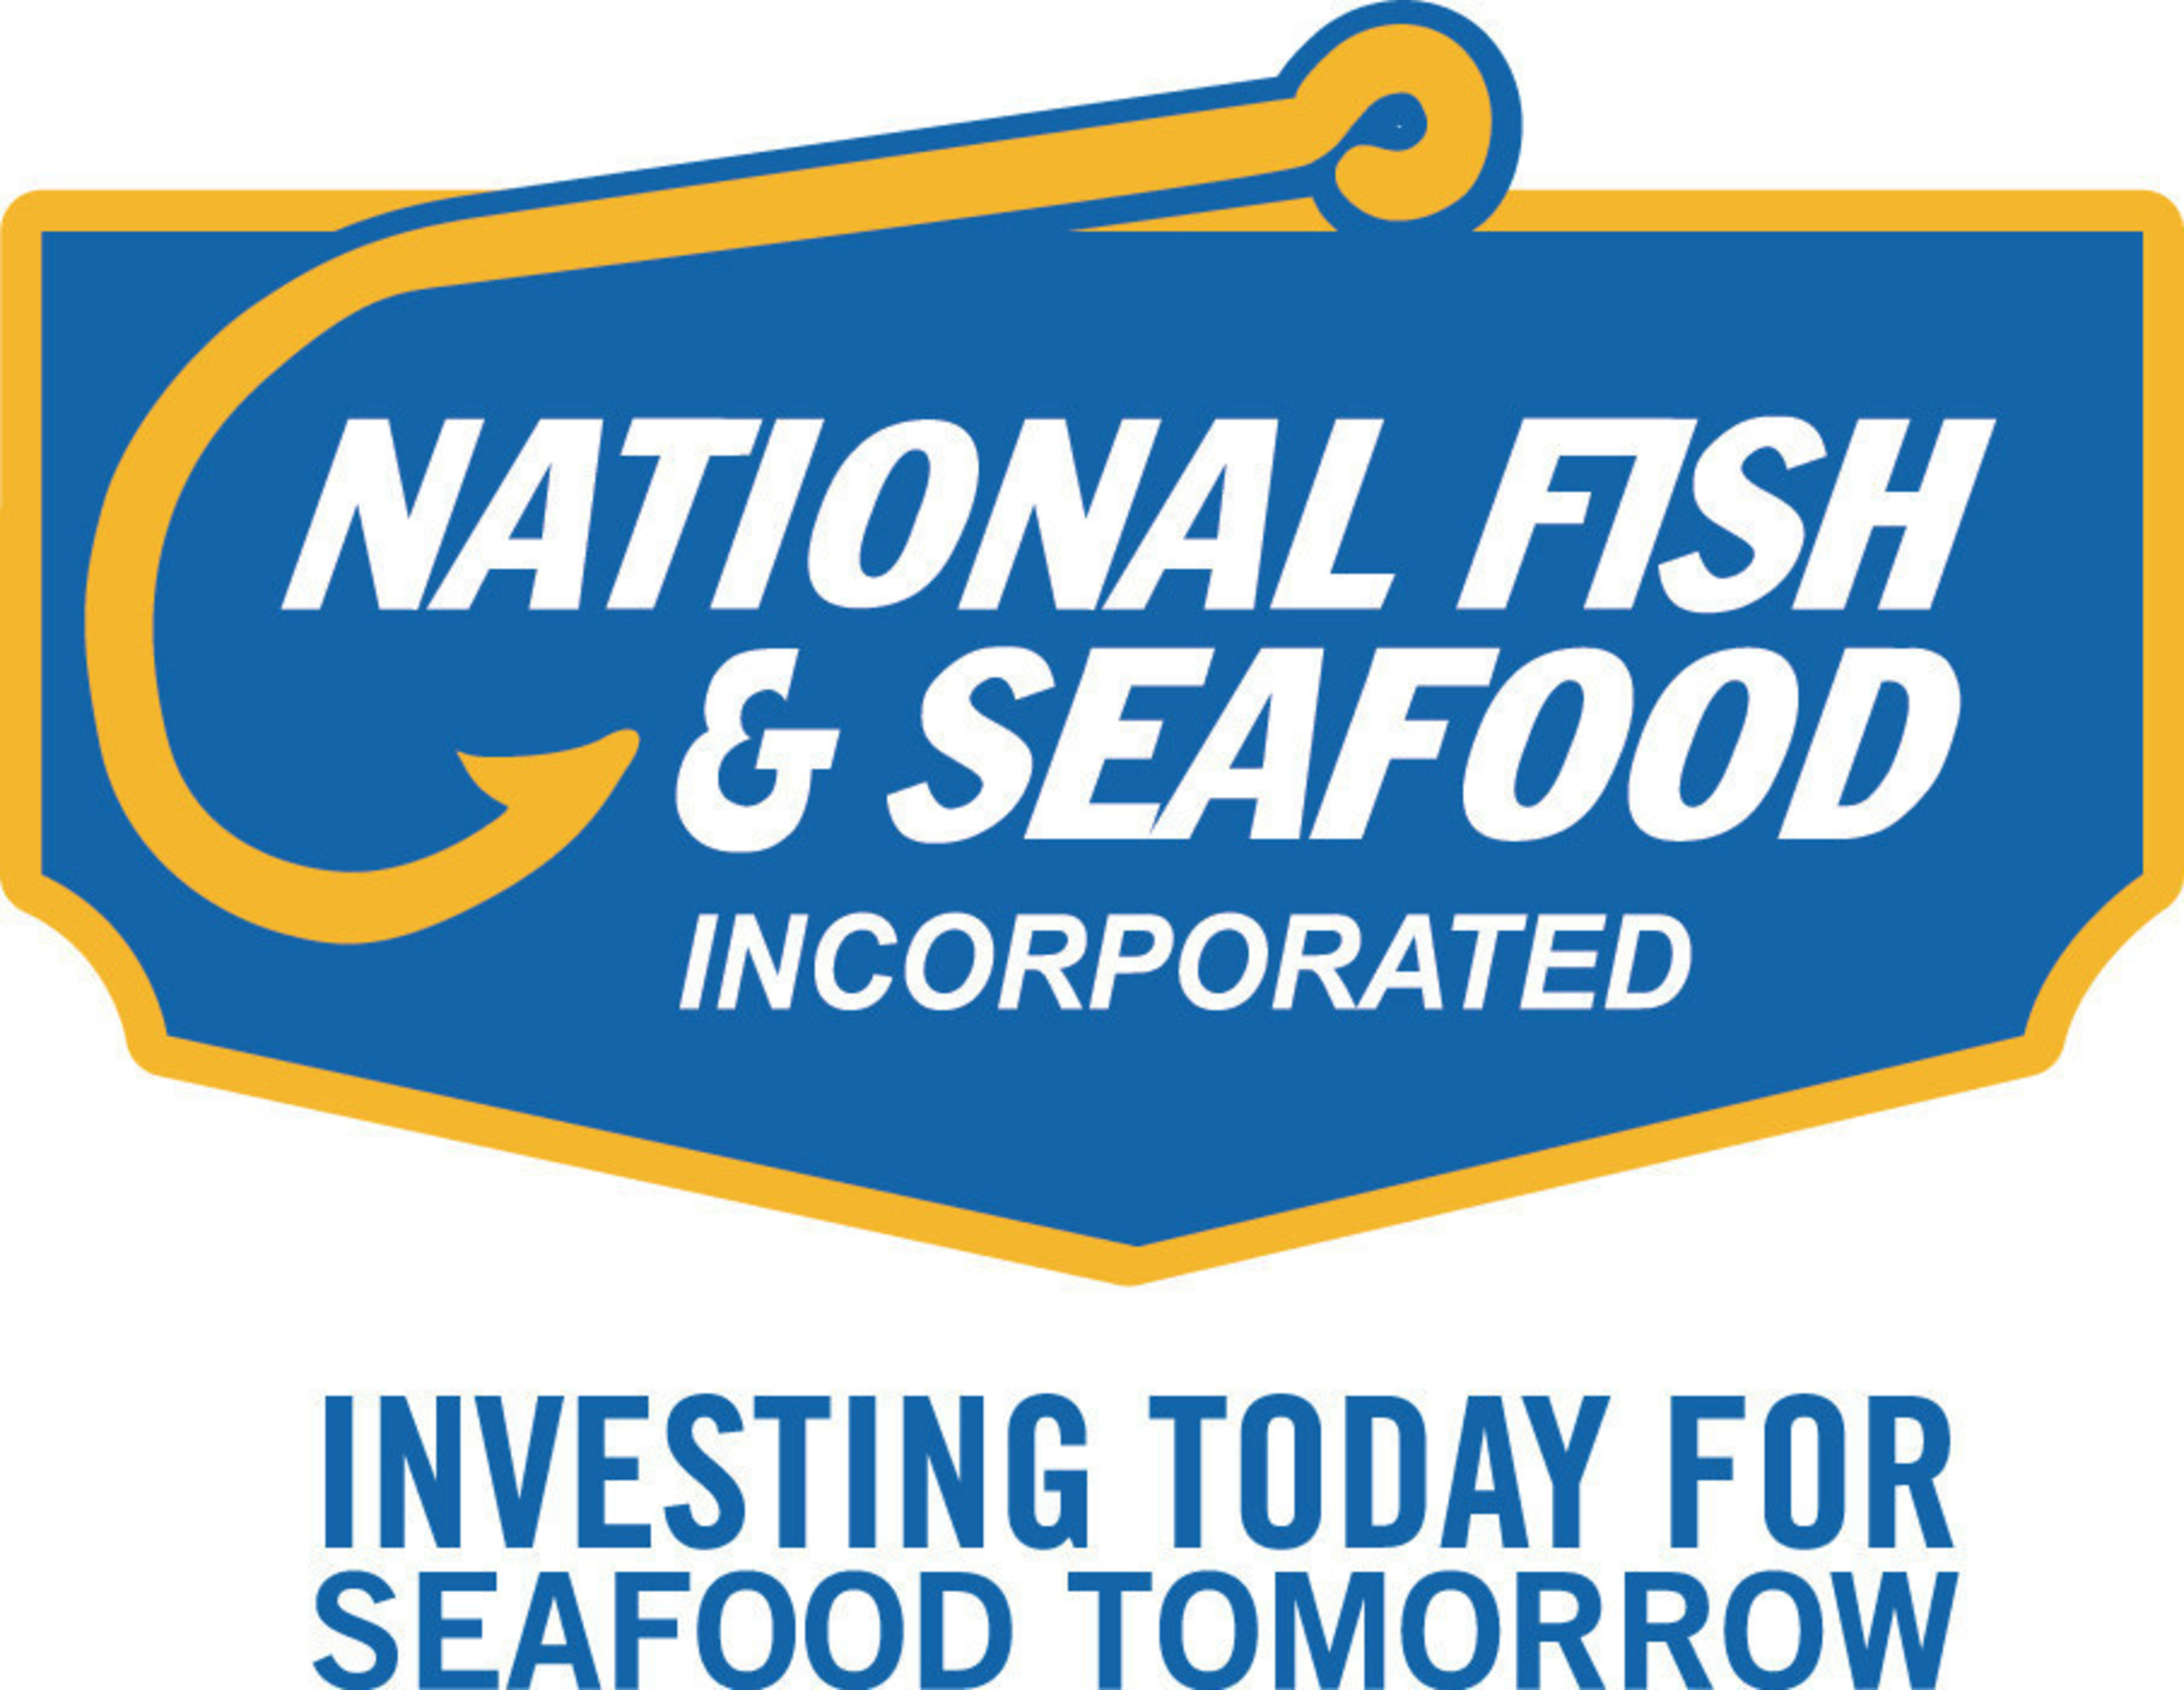 National Fish & Seafood